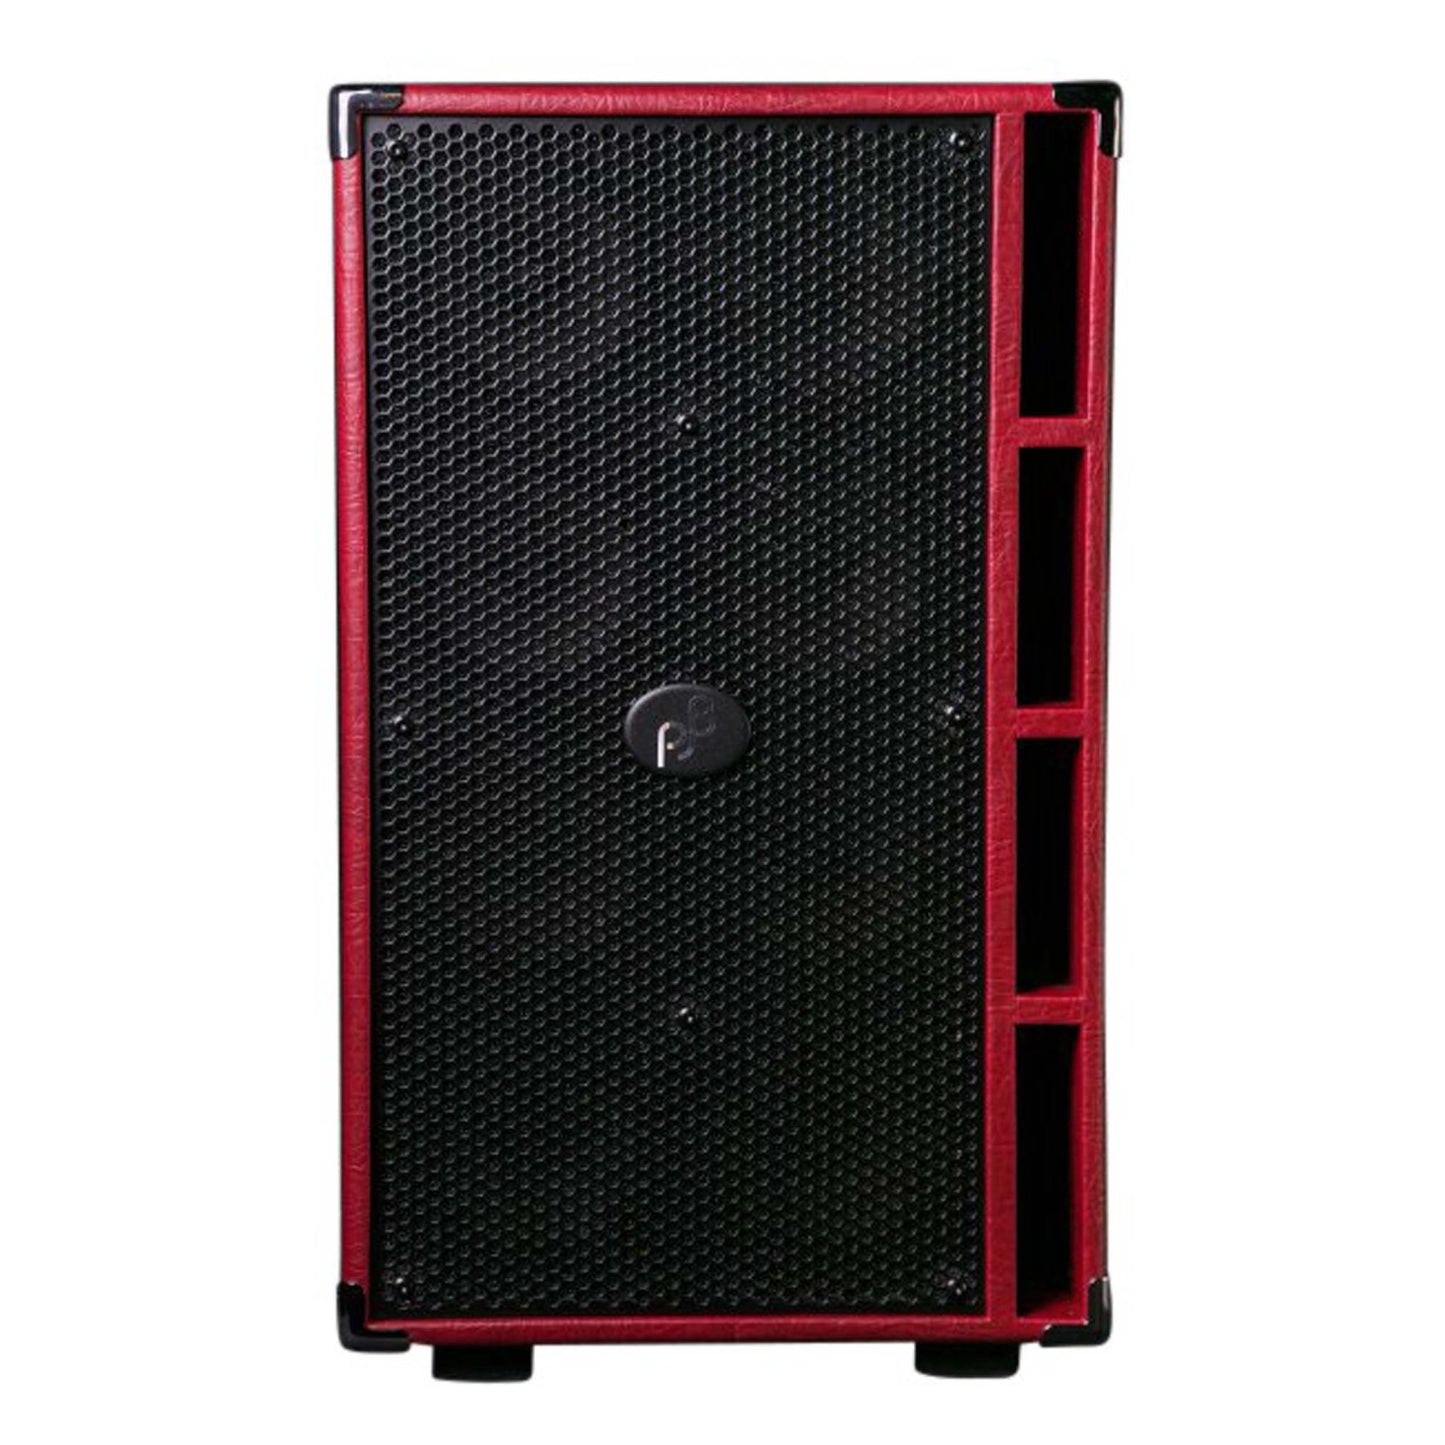 Phil Jones C8 Compact 8x5 Bass Cabinet, Red